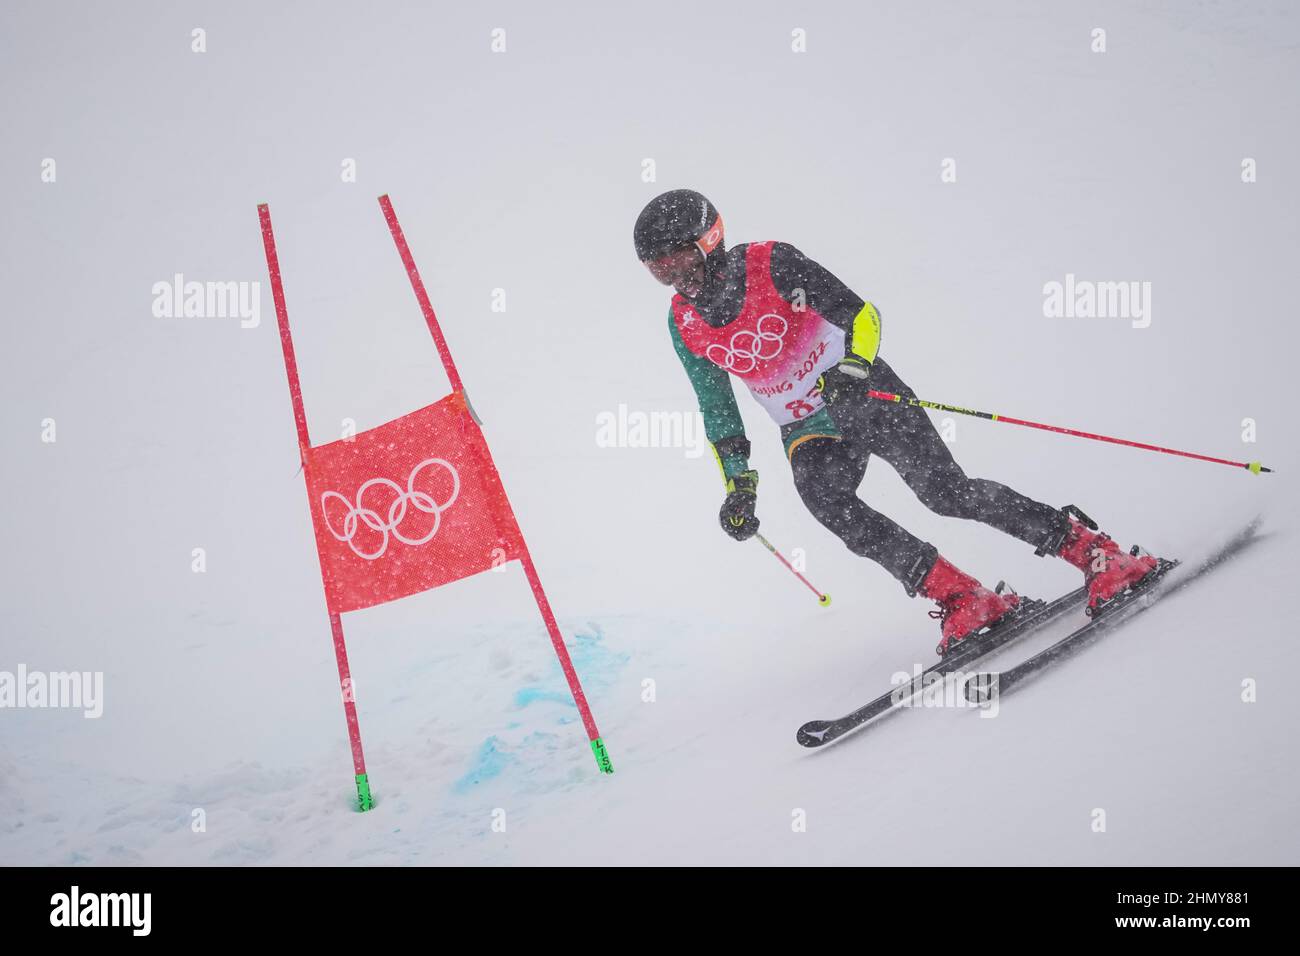 olympic alpine skiing live